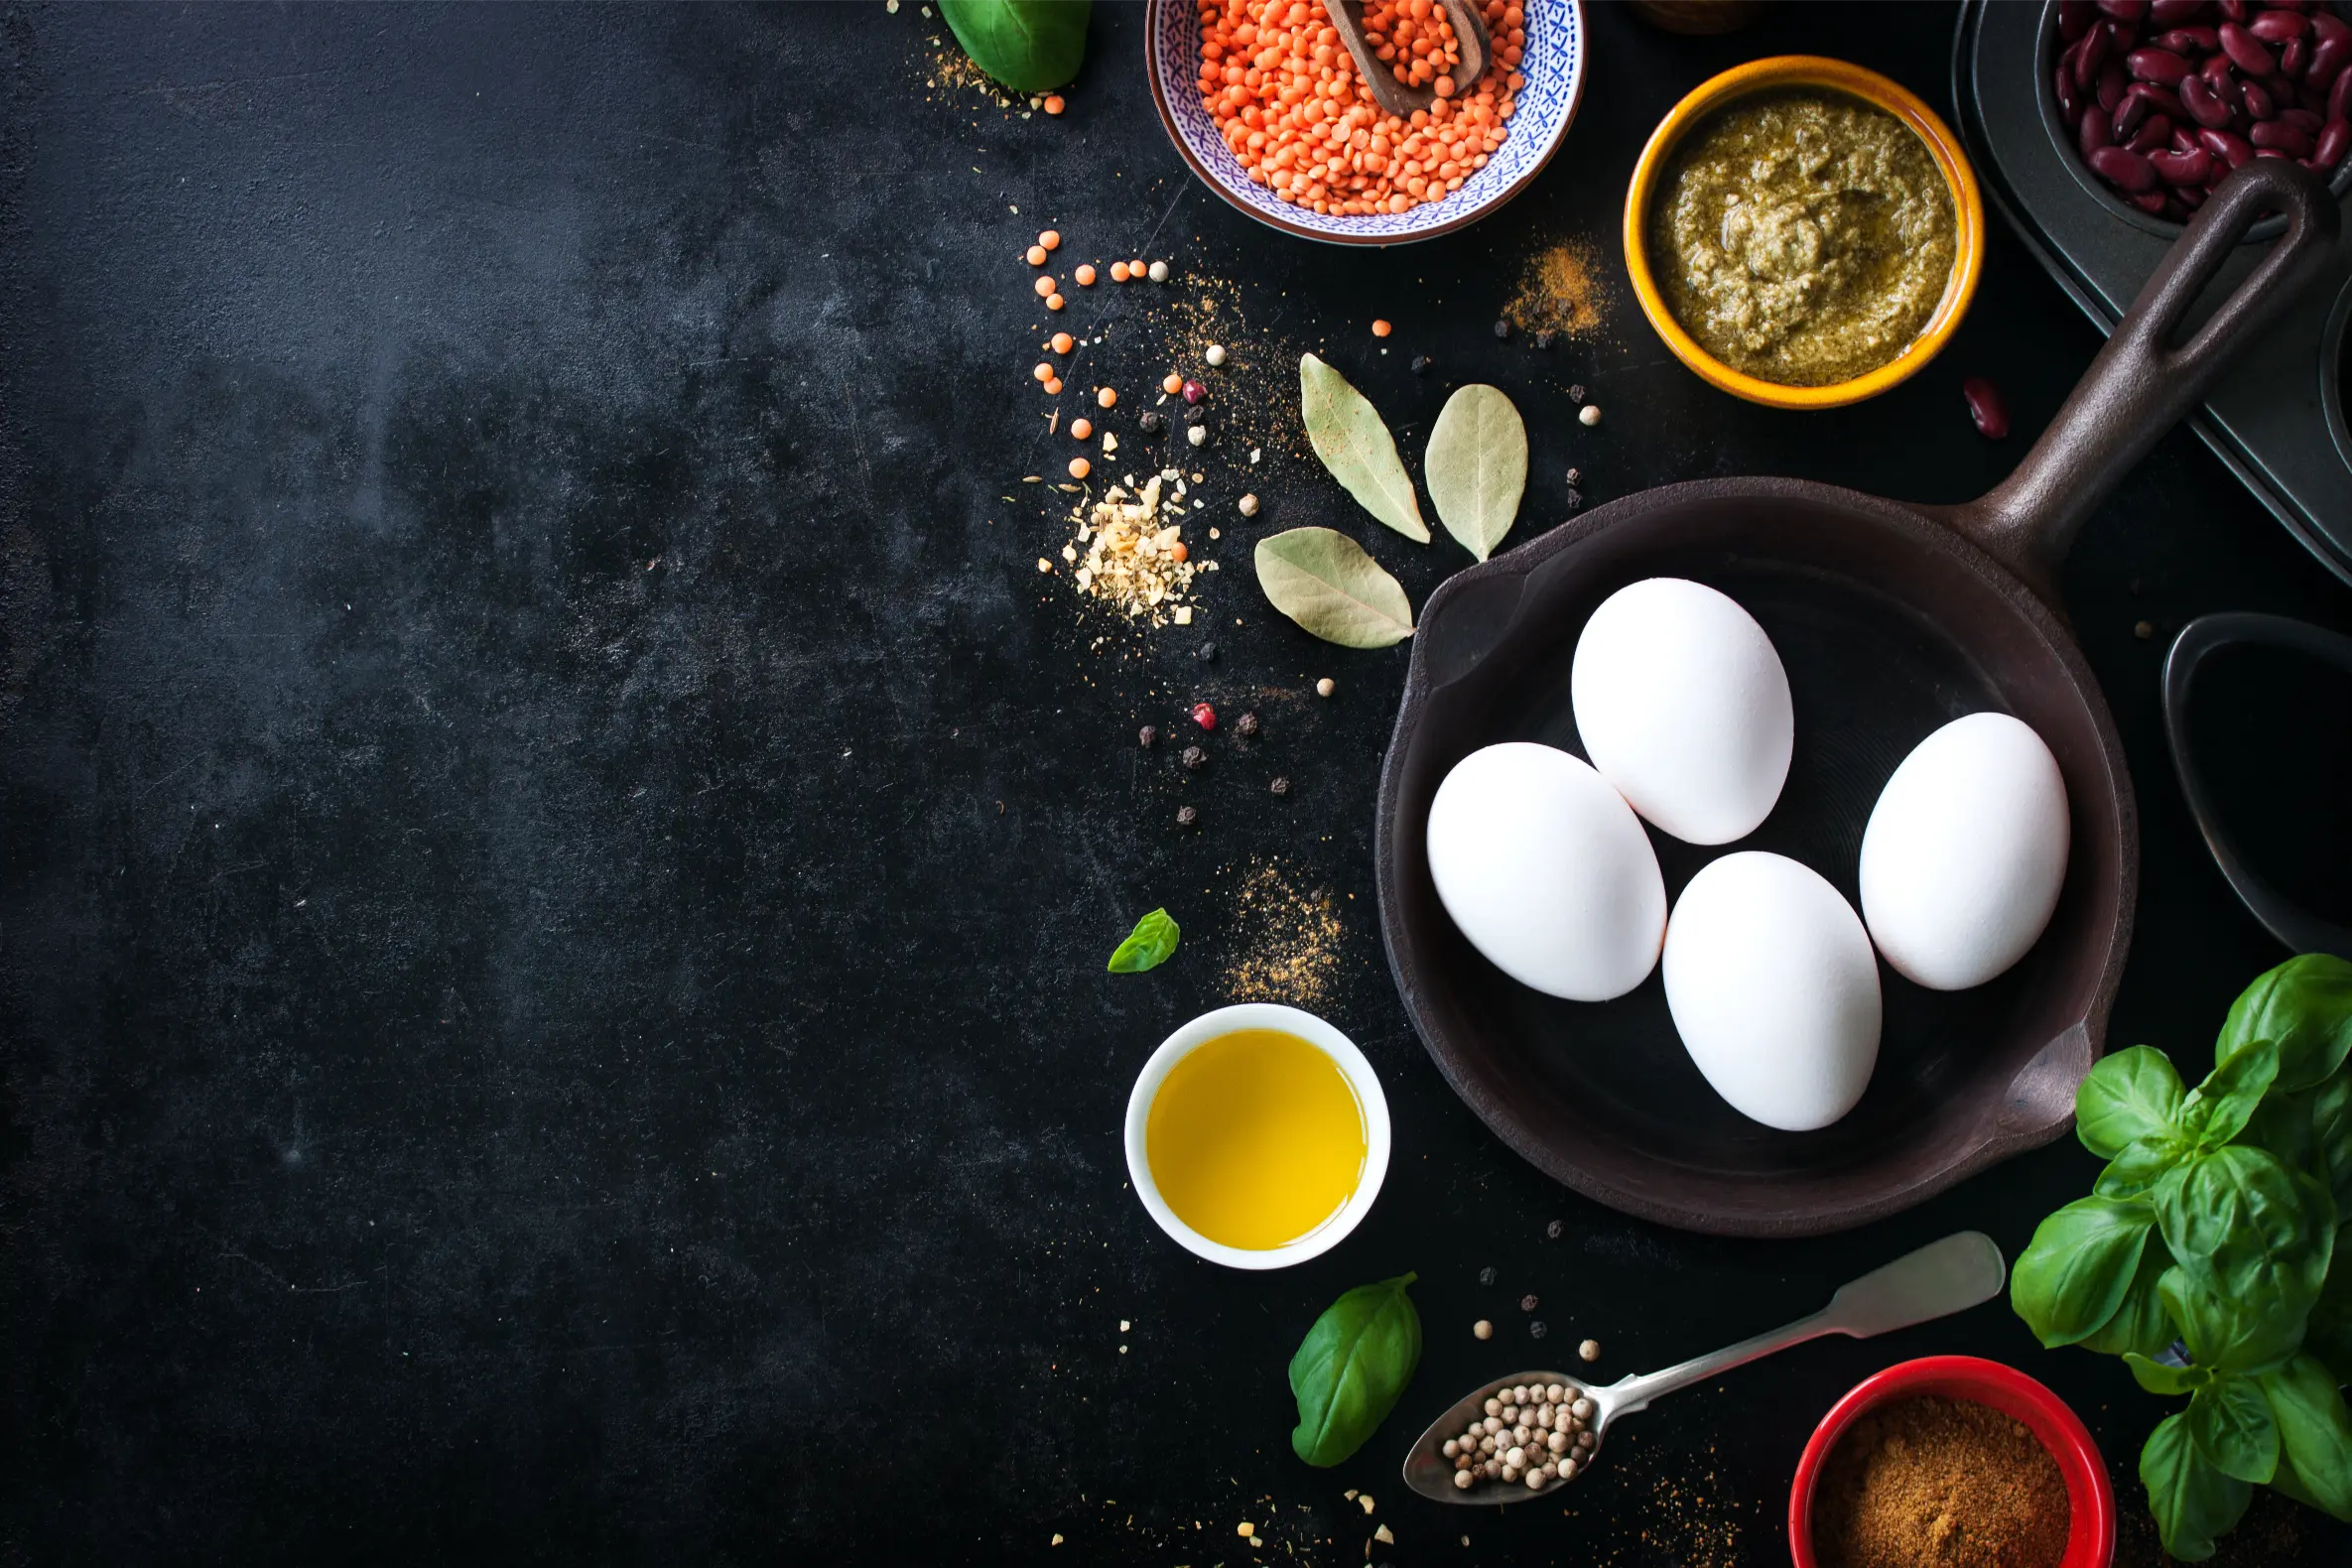 Ingredients of egg biryani